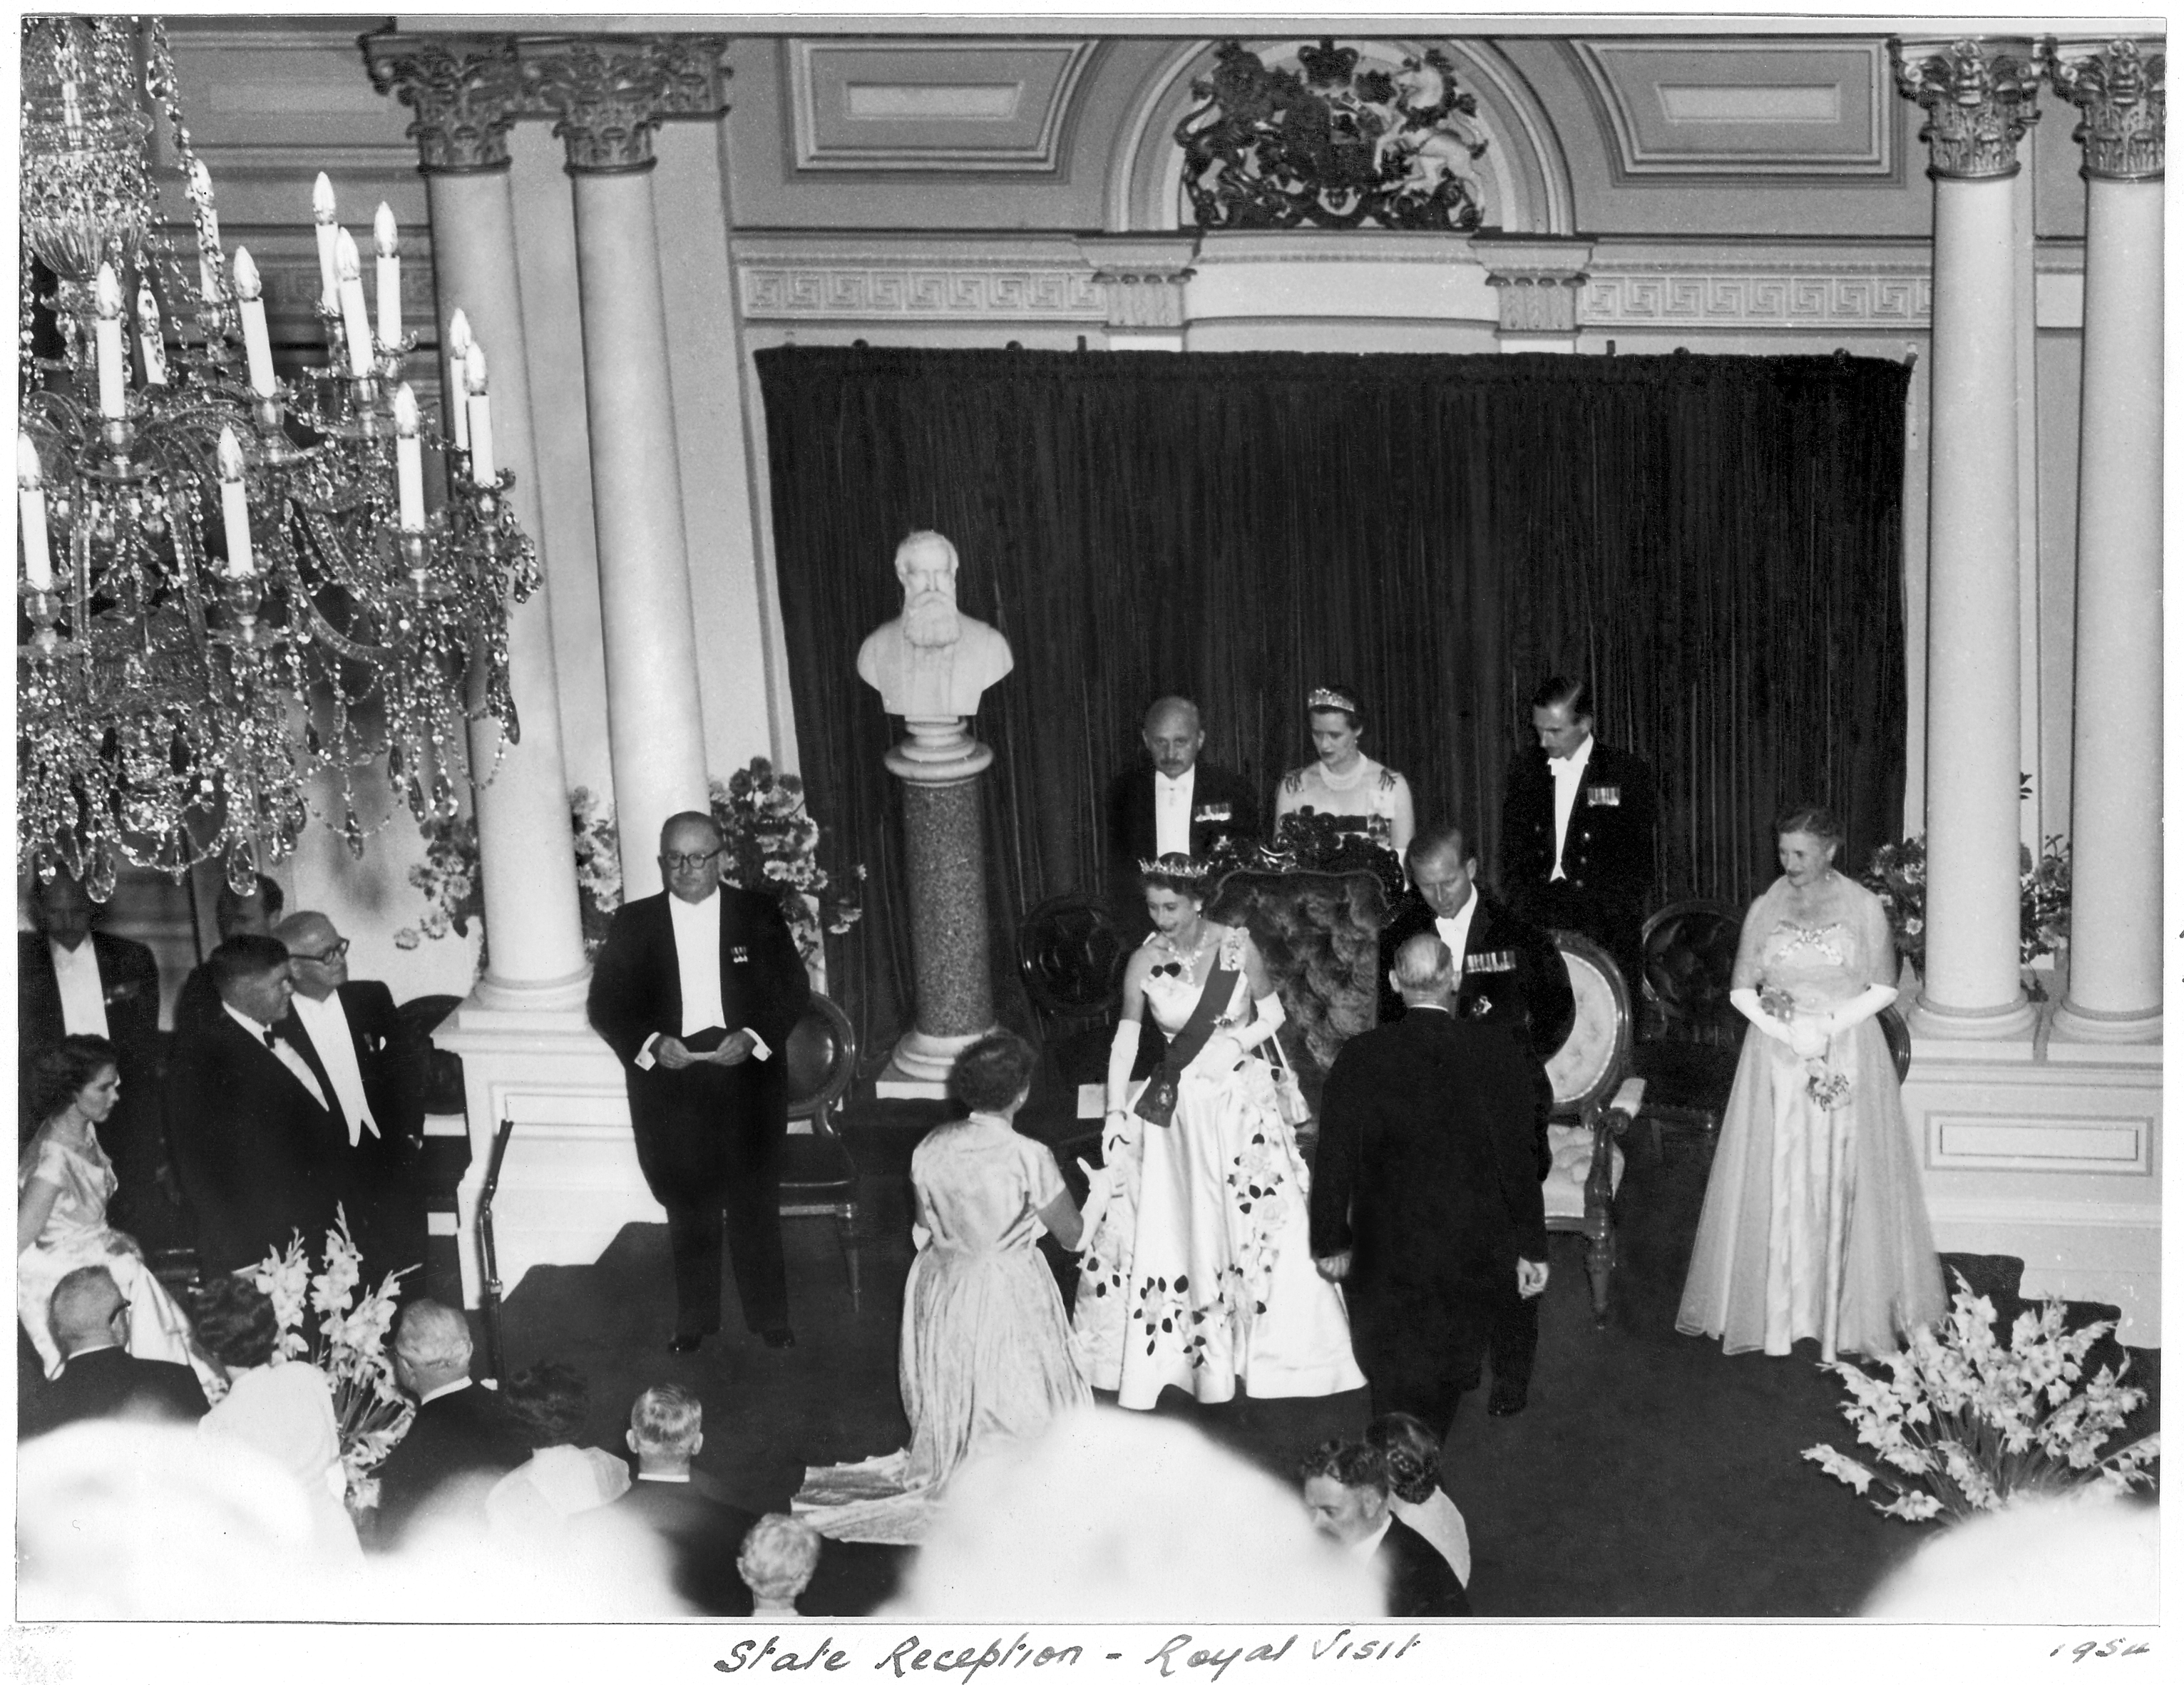 Her Majesty Queen Elizabeth II and HRH The Duke of Edinburgh at State Reception, Brisbane, 1954